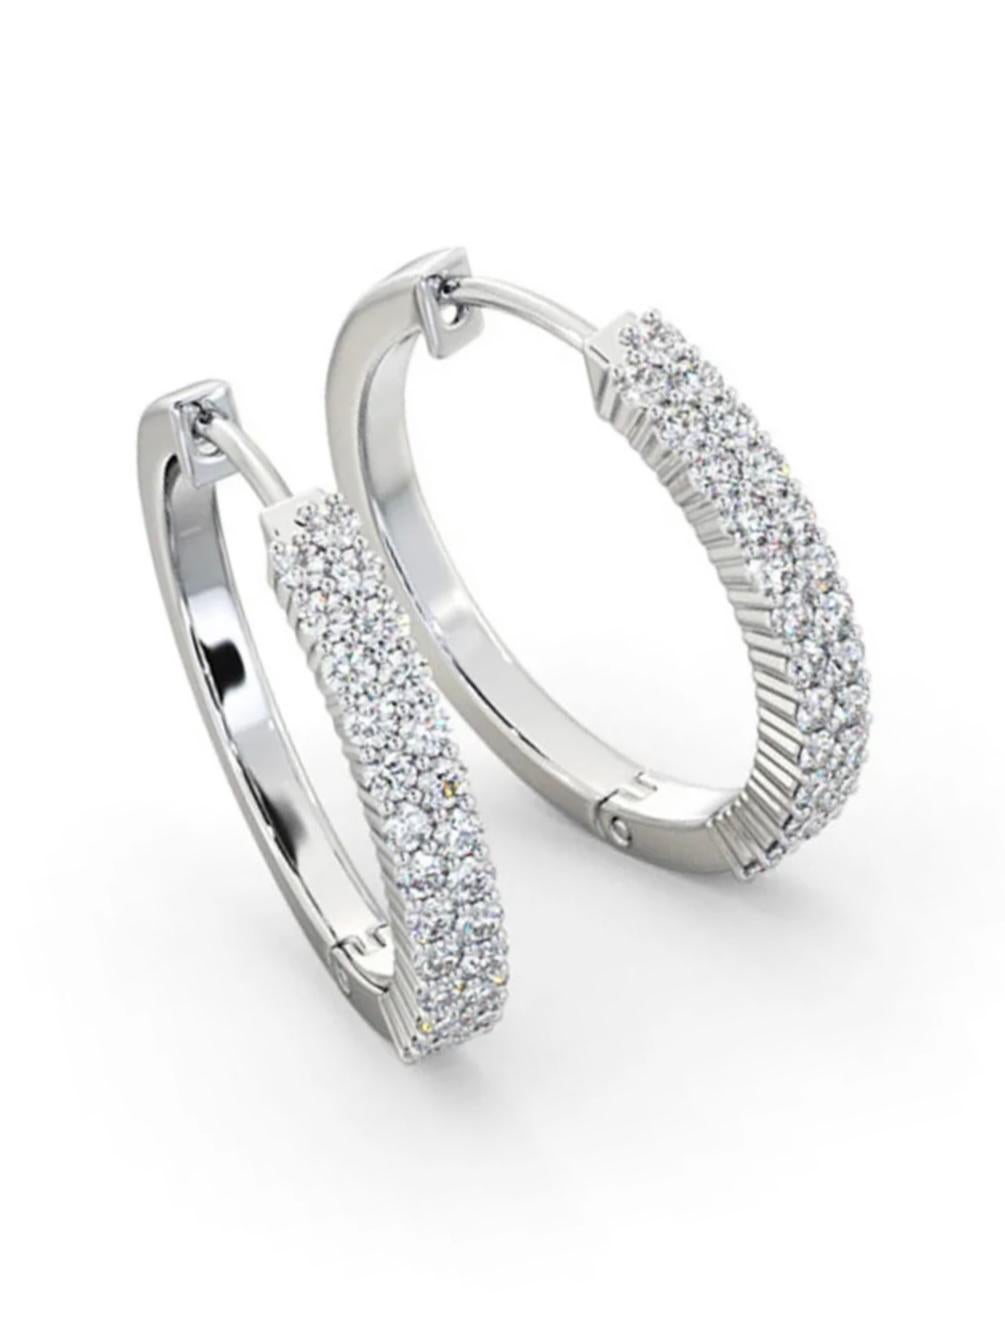 Women's 1ct Diamond Earrings Hoops 18ct White Gold For Sale